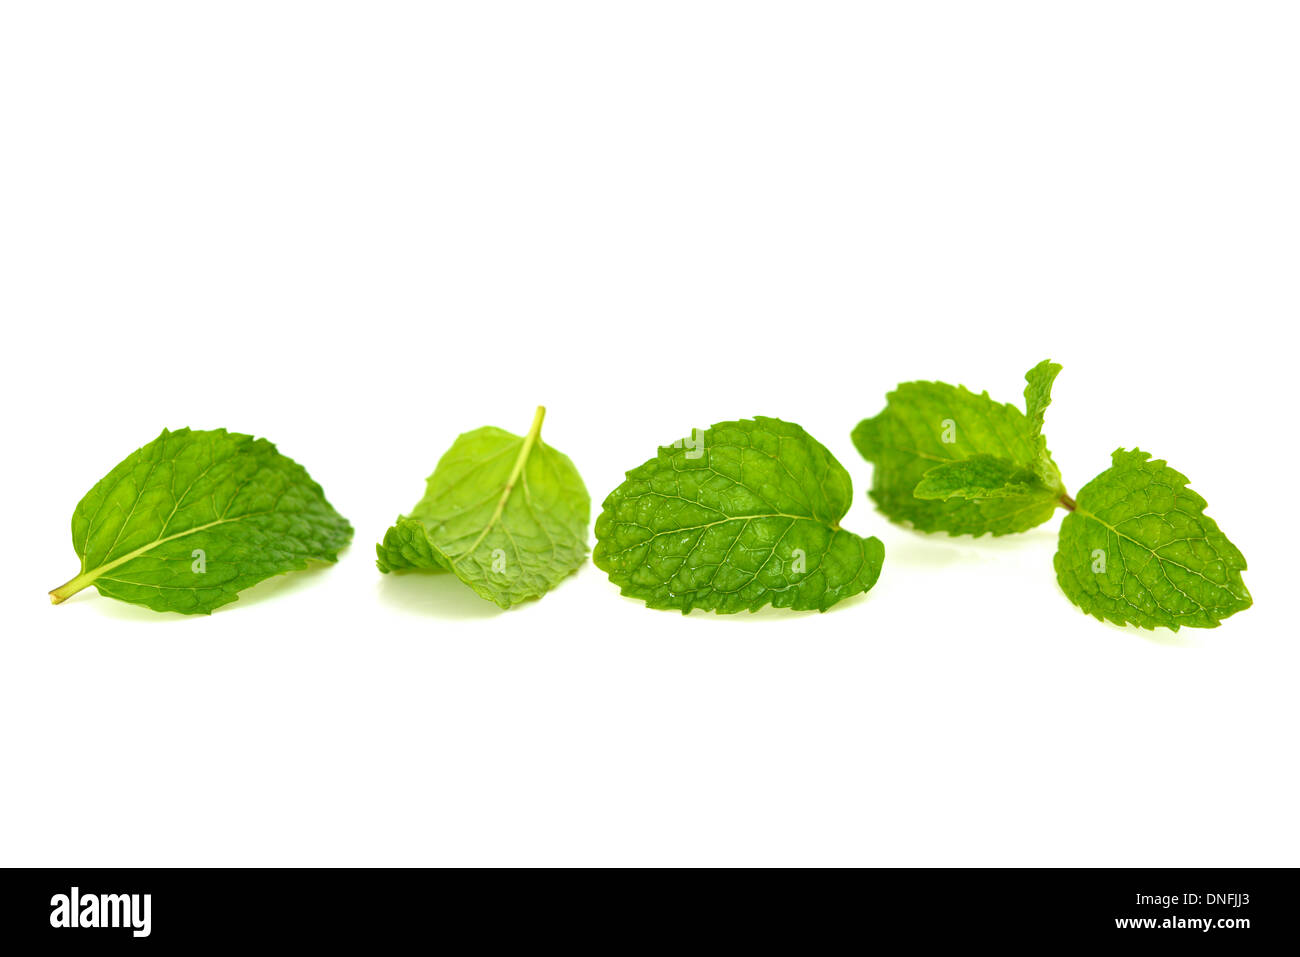 mint leaf isolated on white Stock Photo